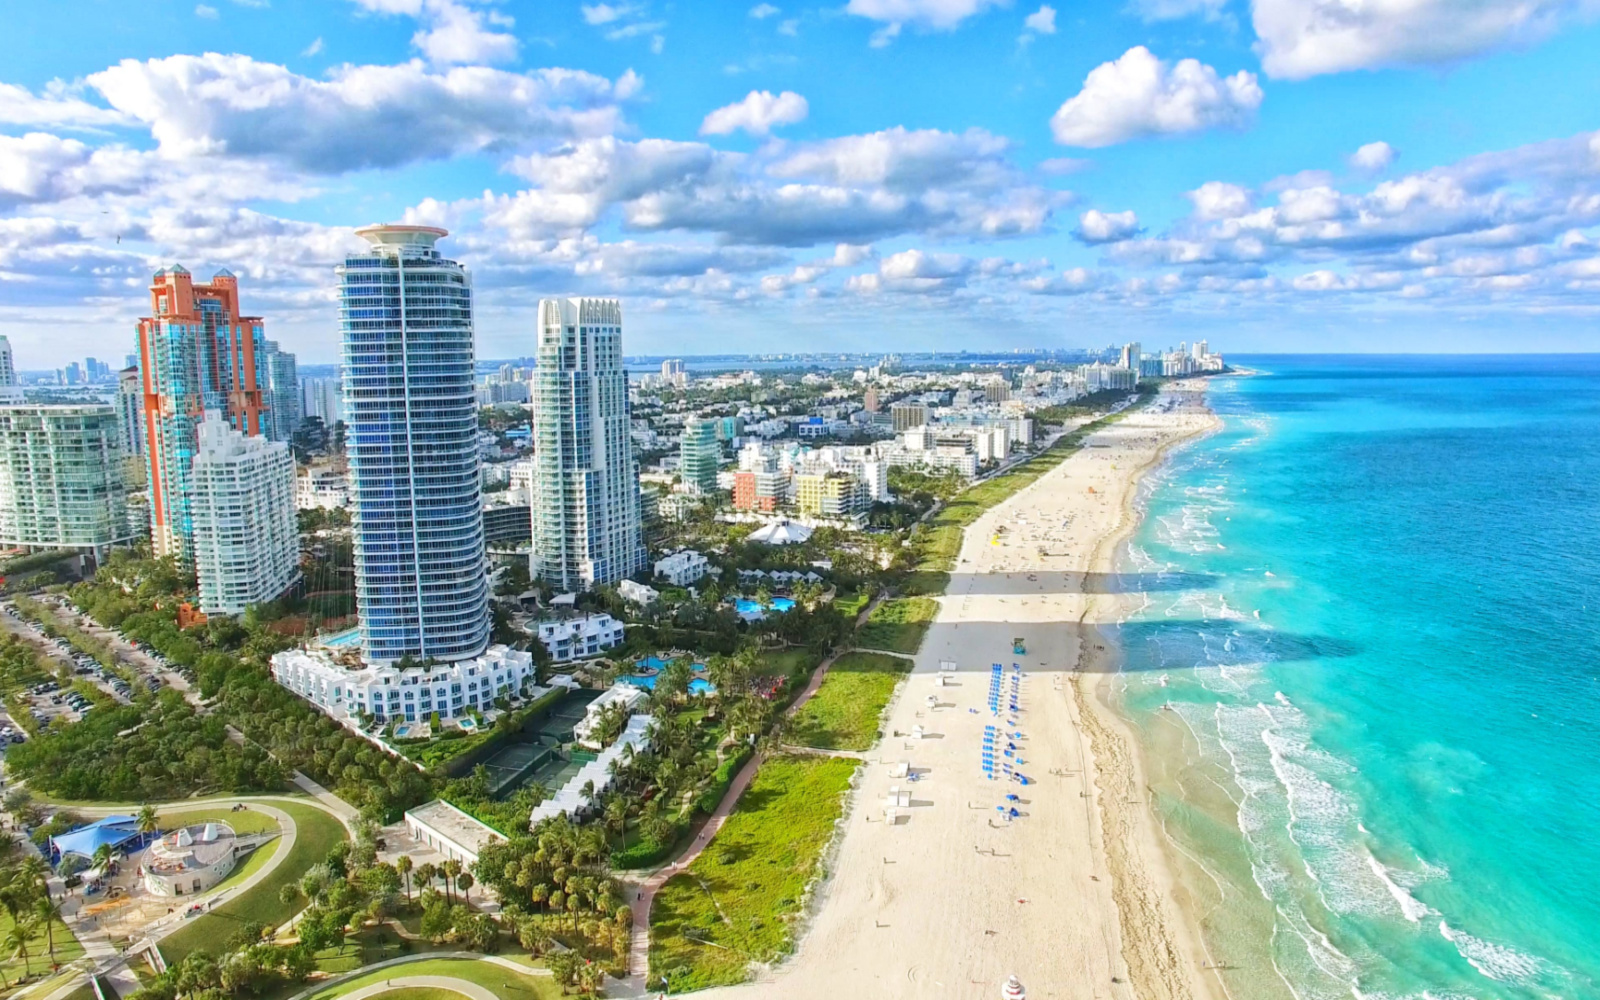 Is Florida Safe in 2023? | Travel Tips & Safety Concerns